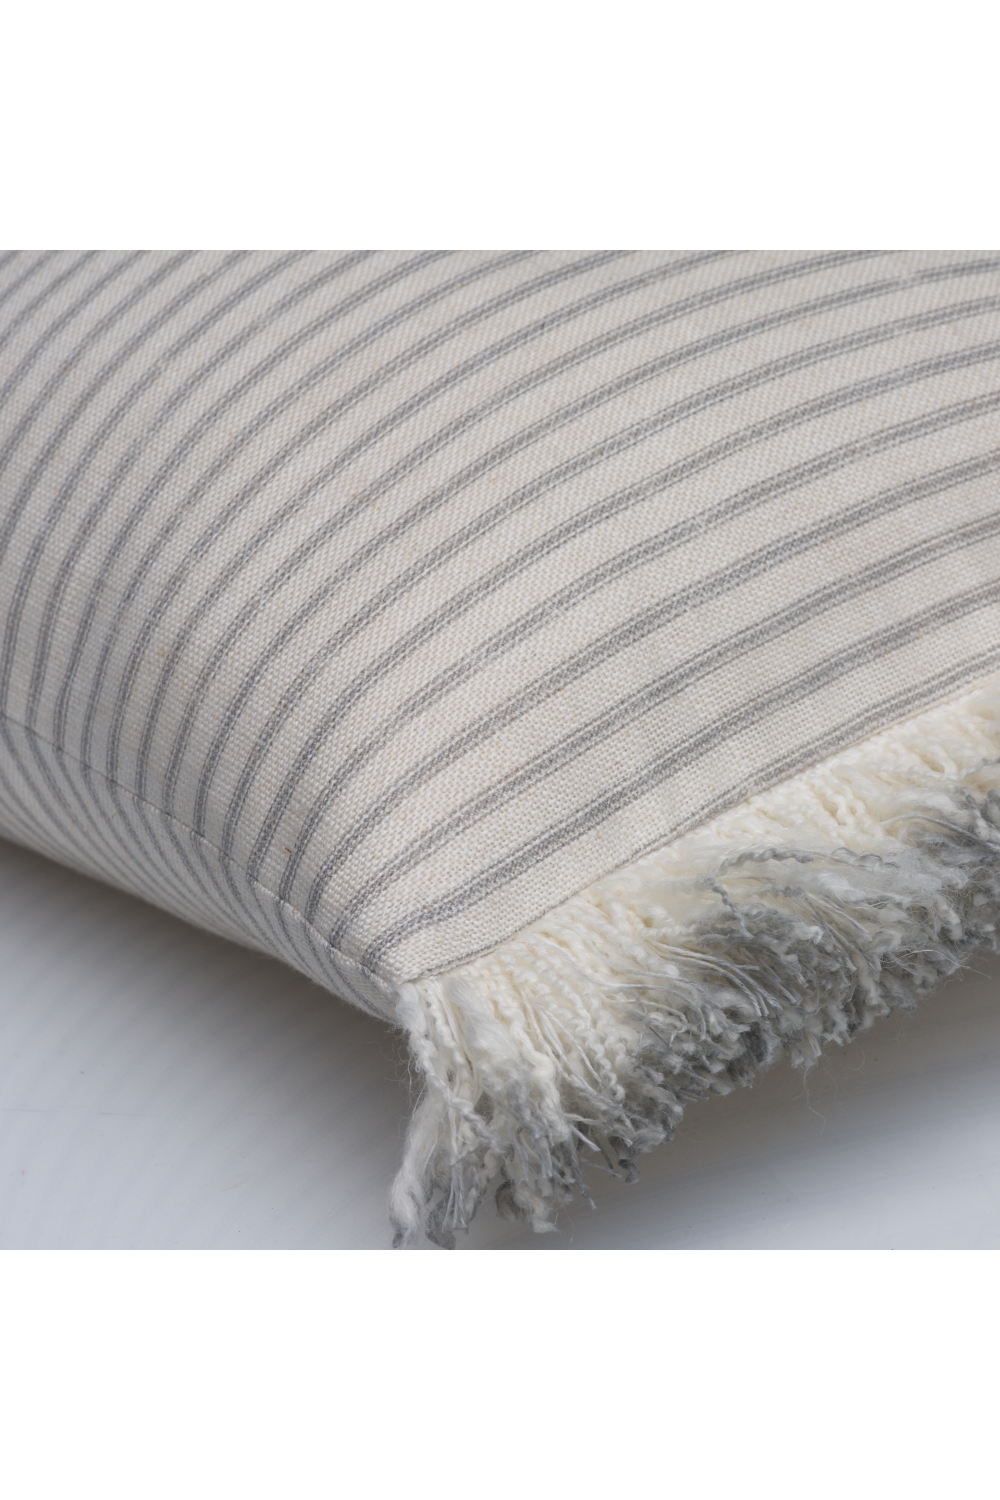 Stripe Cushion With Fringes | Andrew Martin Picket Leaf | Oroa.com